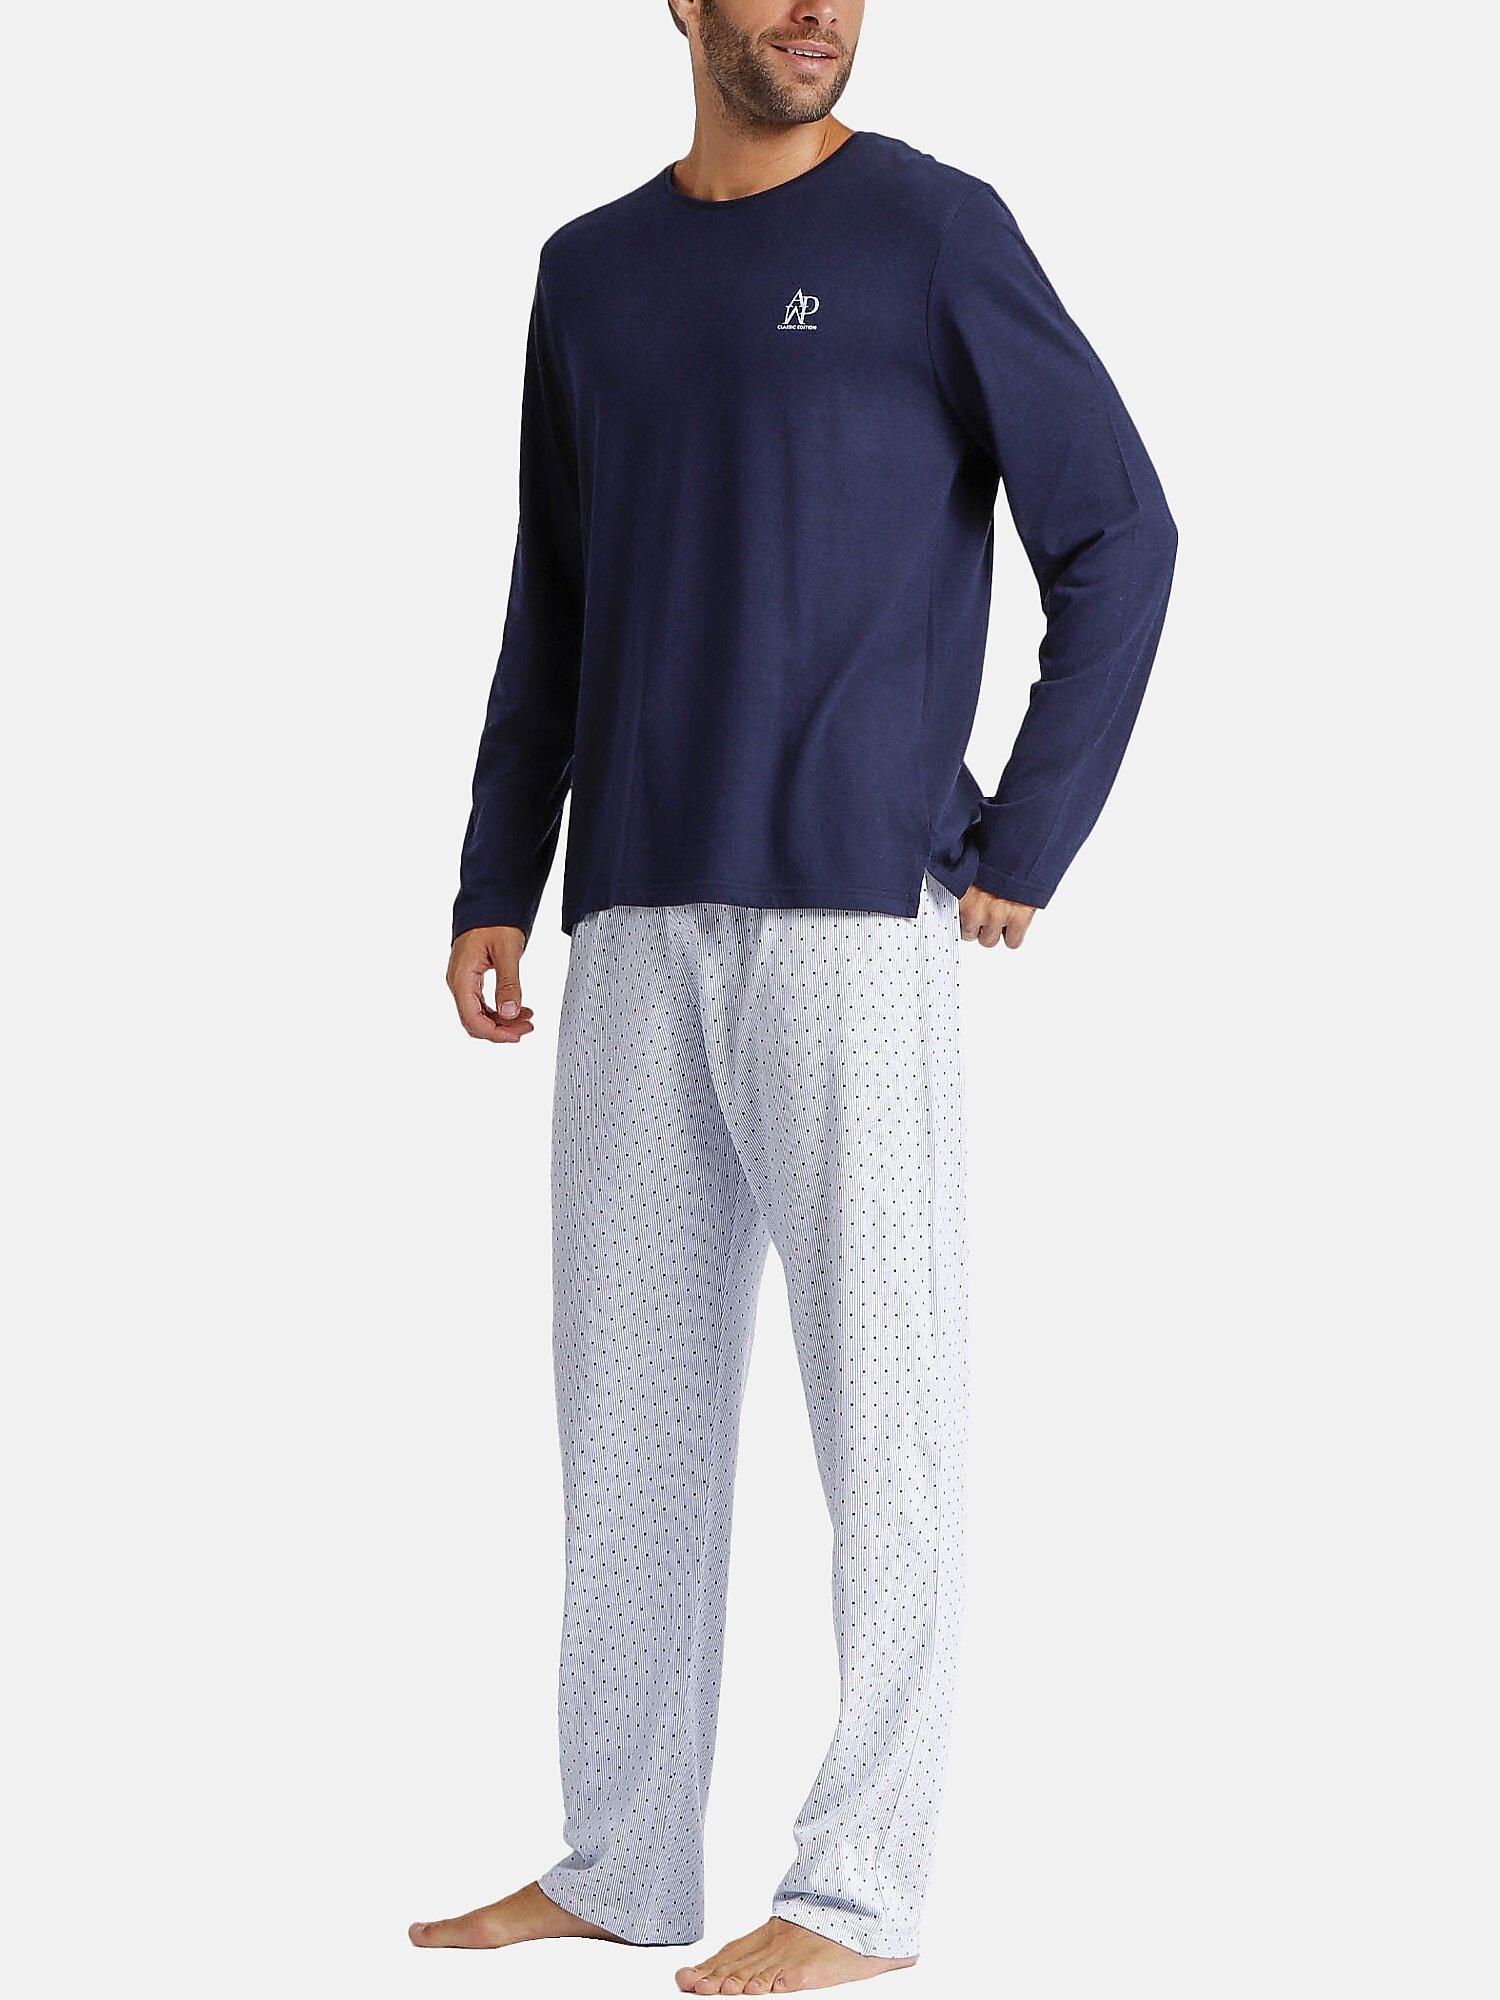 Admas  Pyjama Hose Top Langarm Stripes And Dots 